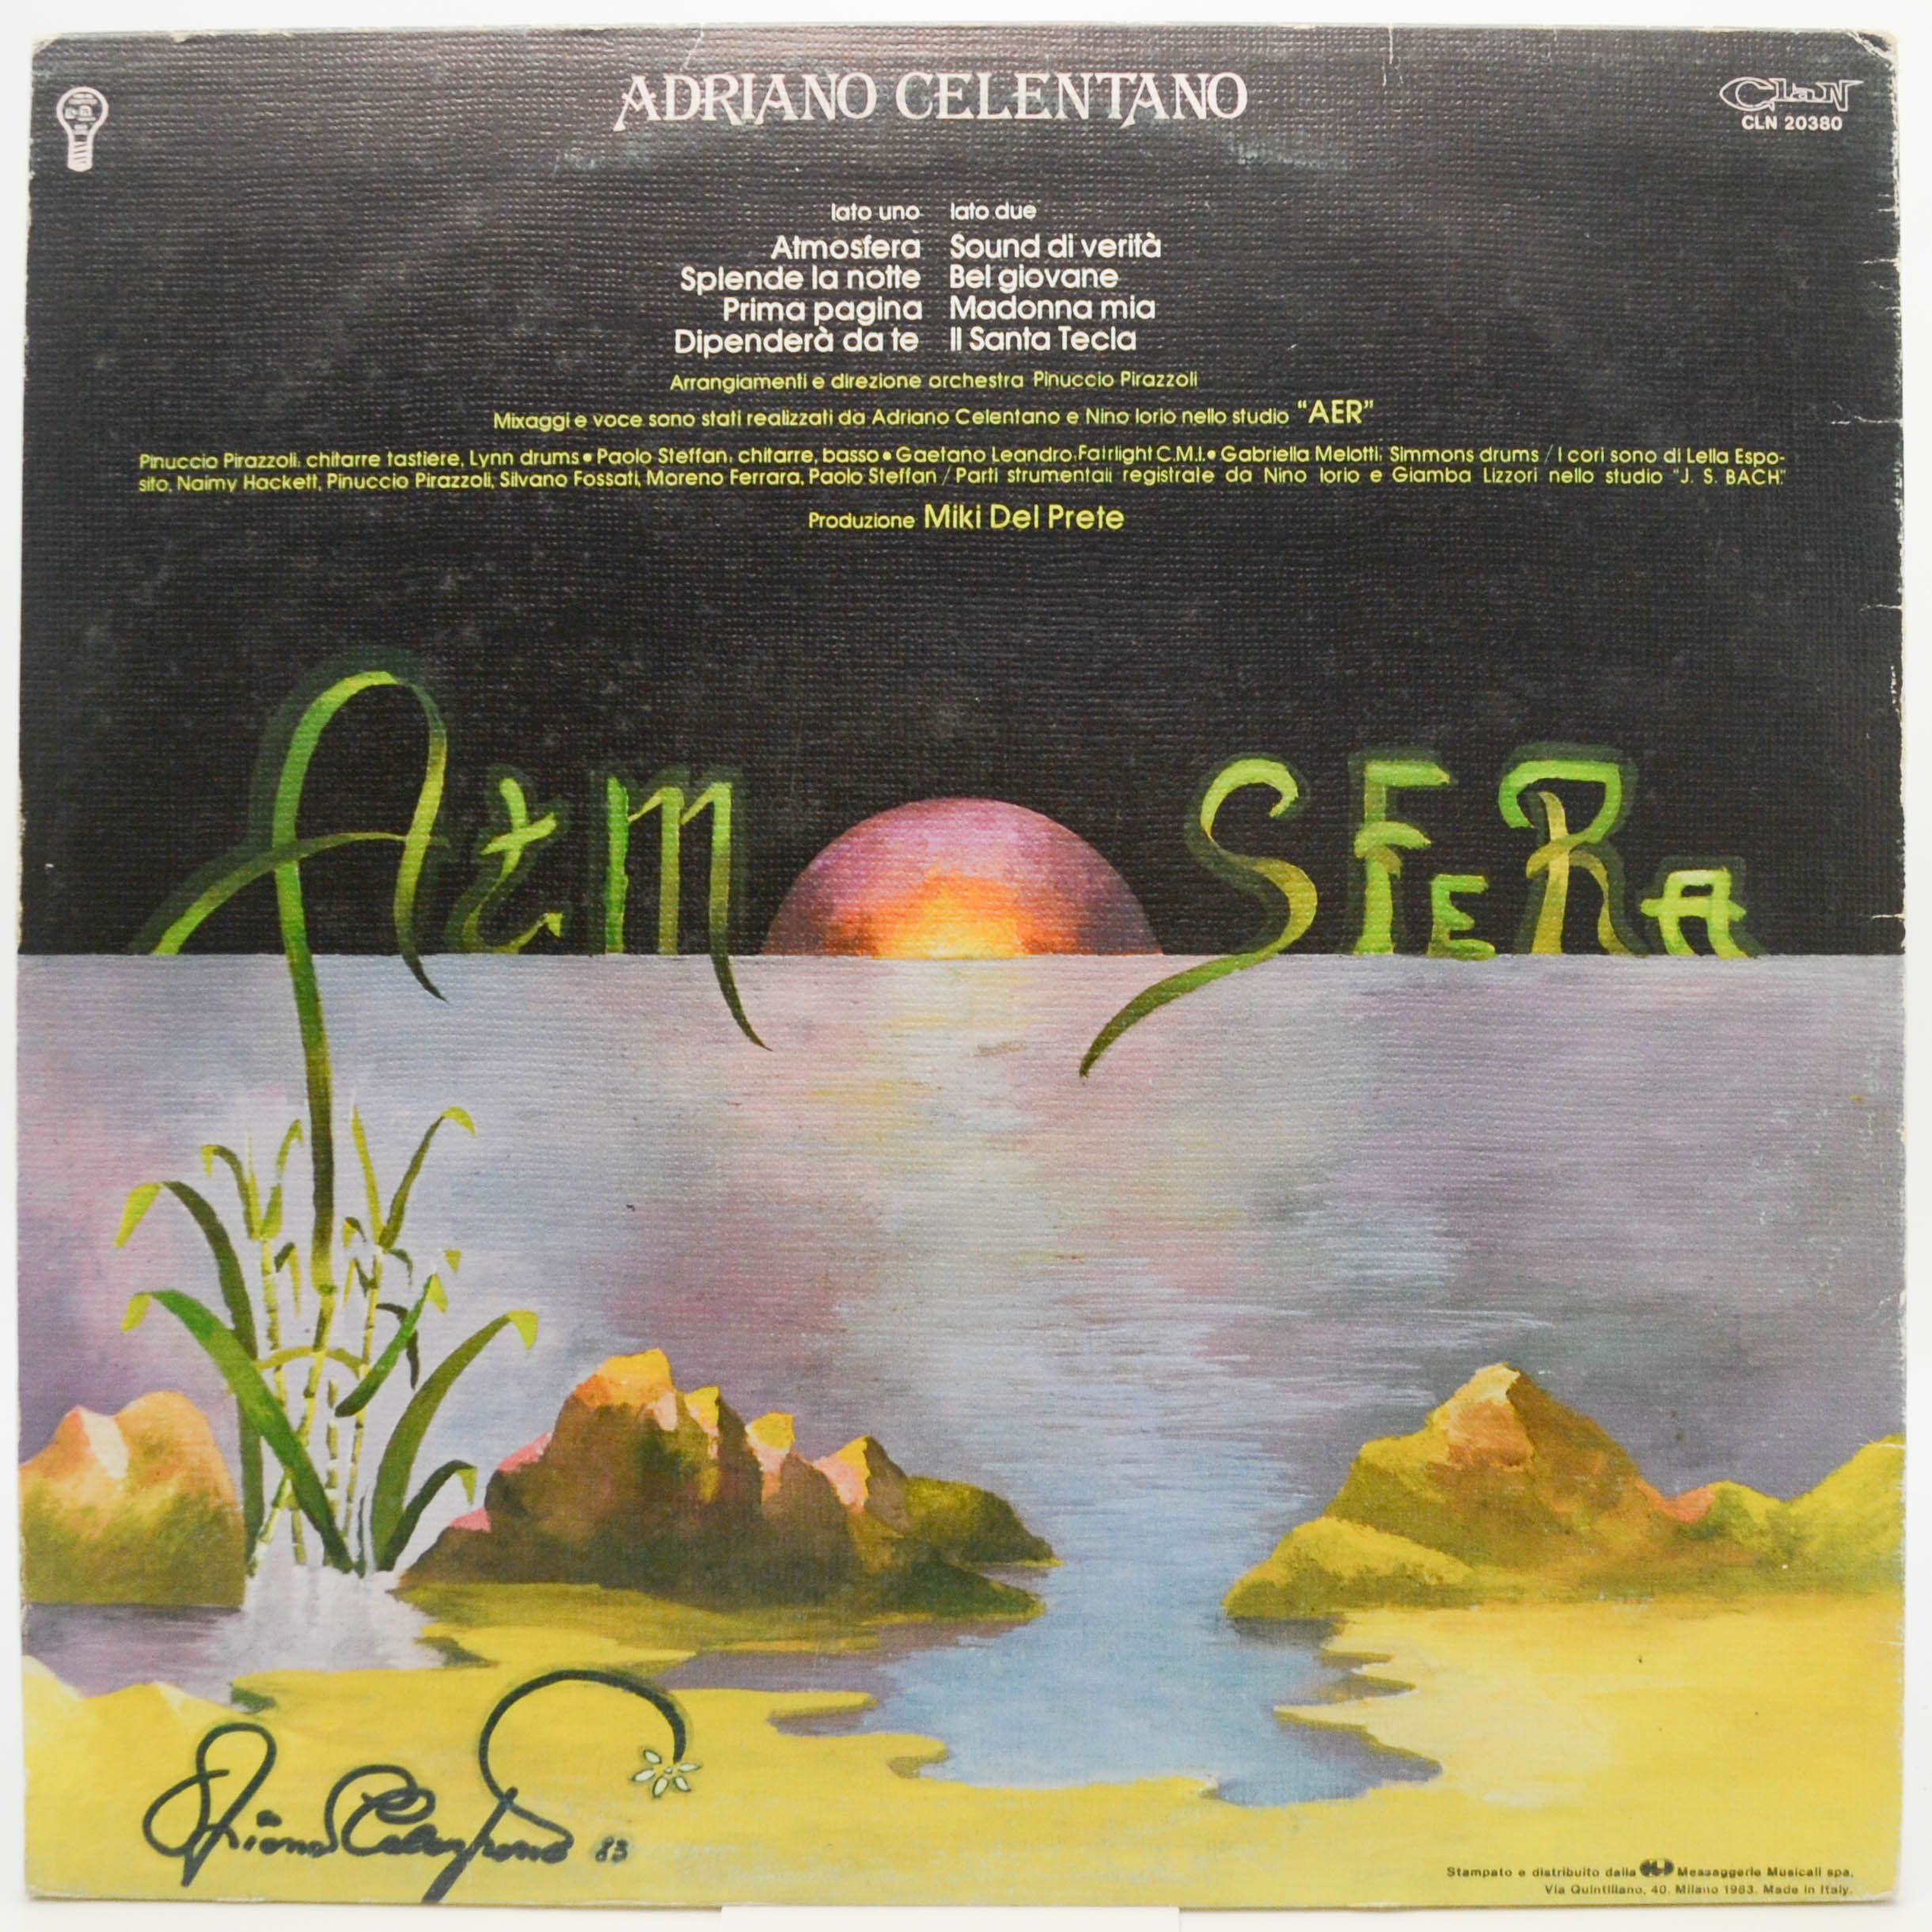 Adriano Celentano — Atmosfera (1-st, Italy, Clan), 1983